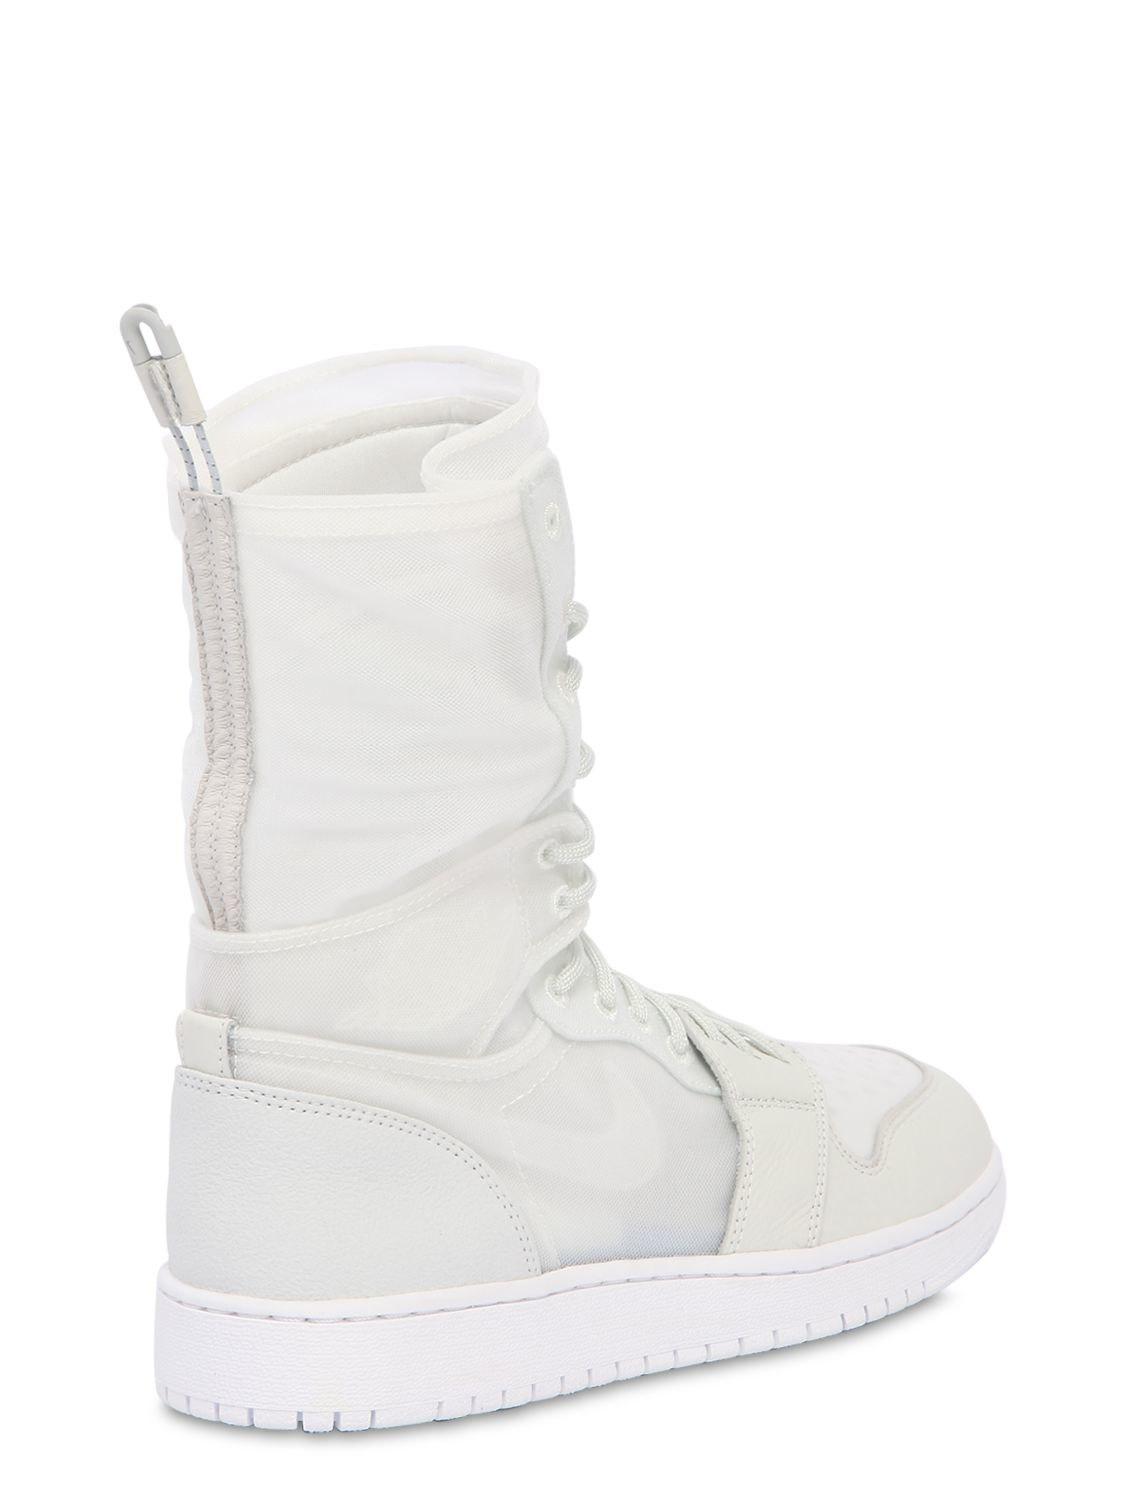 poeți sărăcie potrivi  Nike Air Jordan 1 Explorer Xx Sneaker Boots in White | Lyst UK